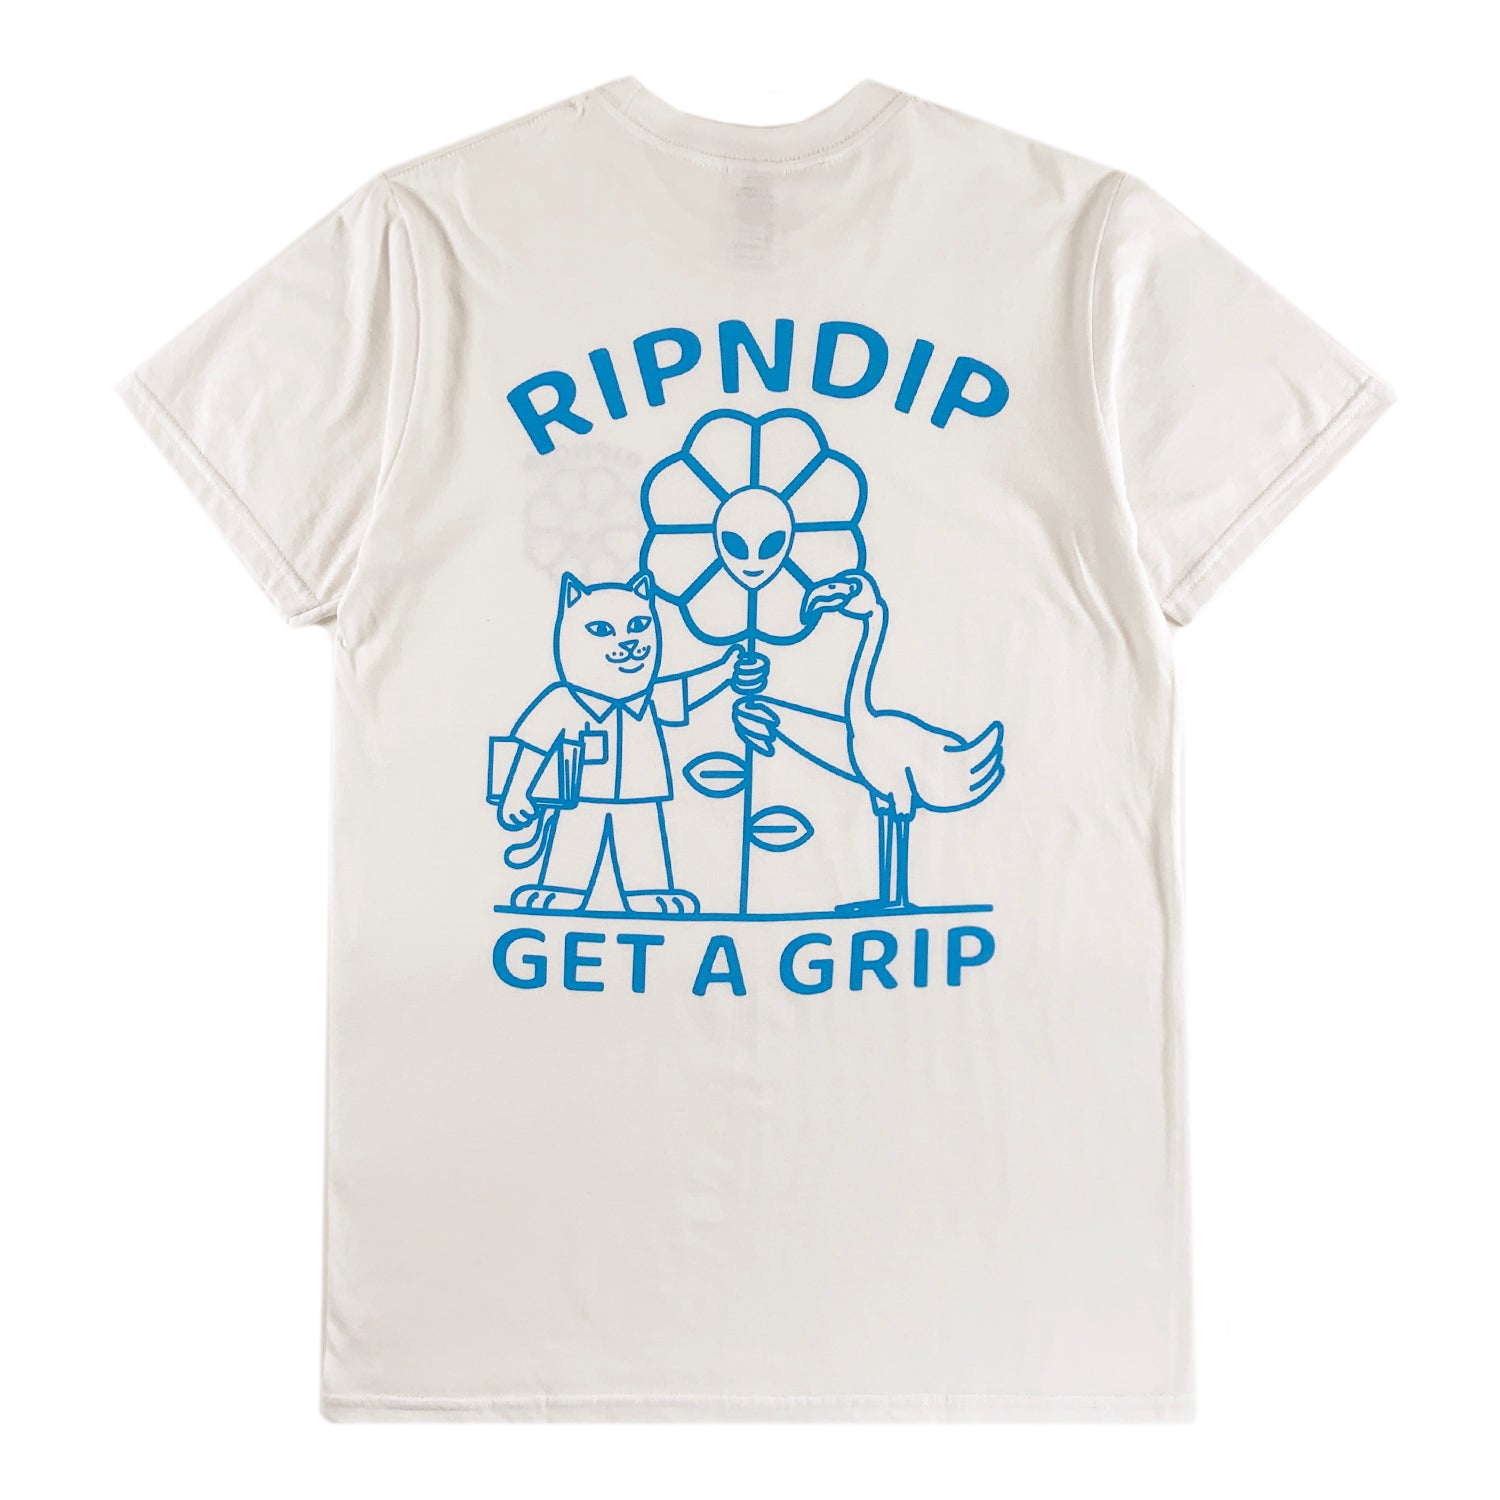 RIPNDIP - Get a Grip T-shirt - White - Prime Delux Store